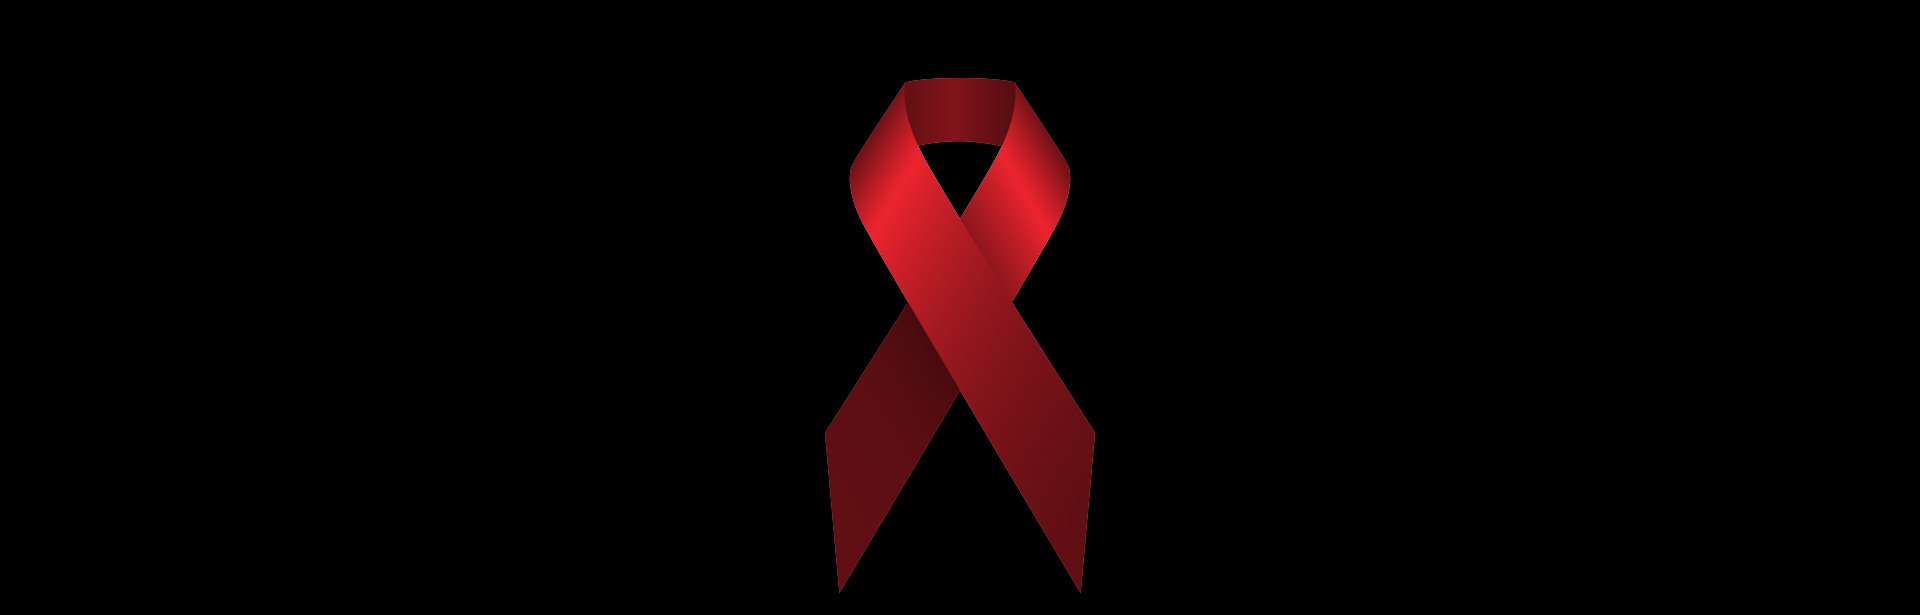   amfAR HIV Cure Summit   World AIDS Day 2015   Get the Details  